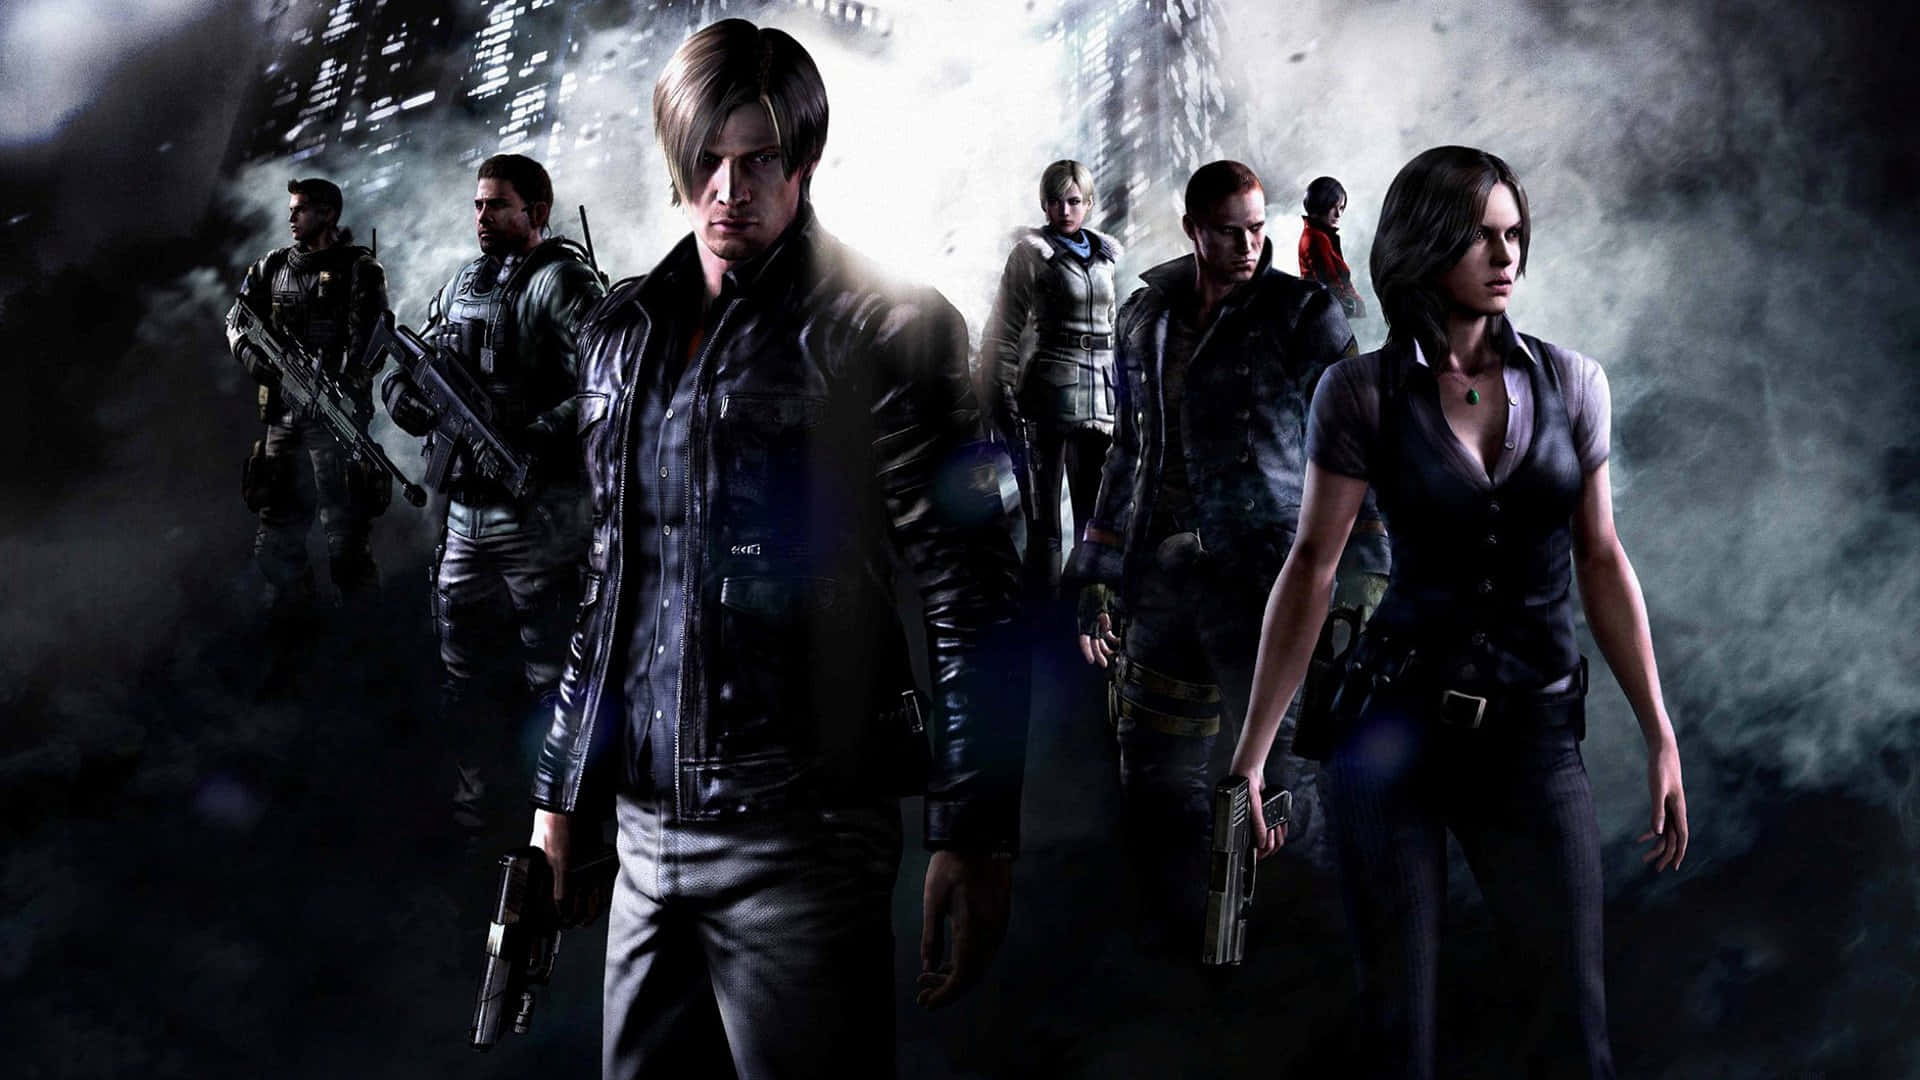 Didascalieiconici Personaggi Di Resident Evil Protagonisti Di Una Scena Ricca D'azione